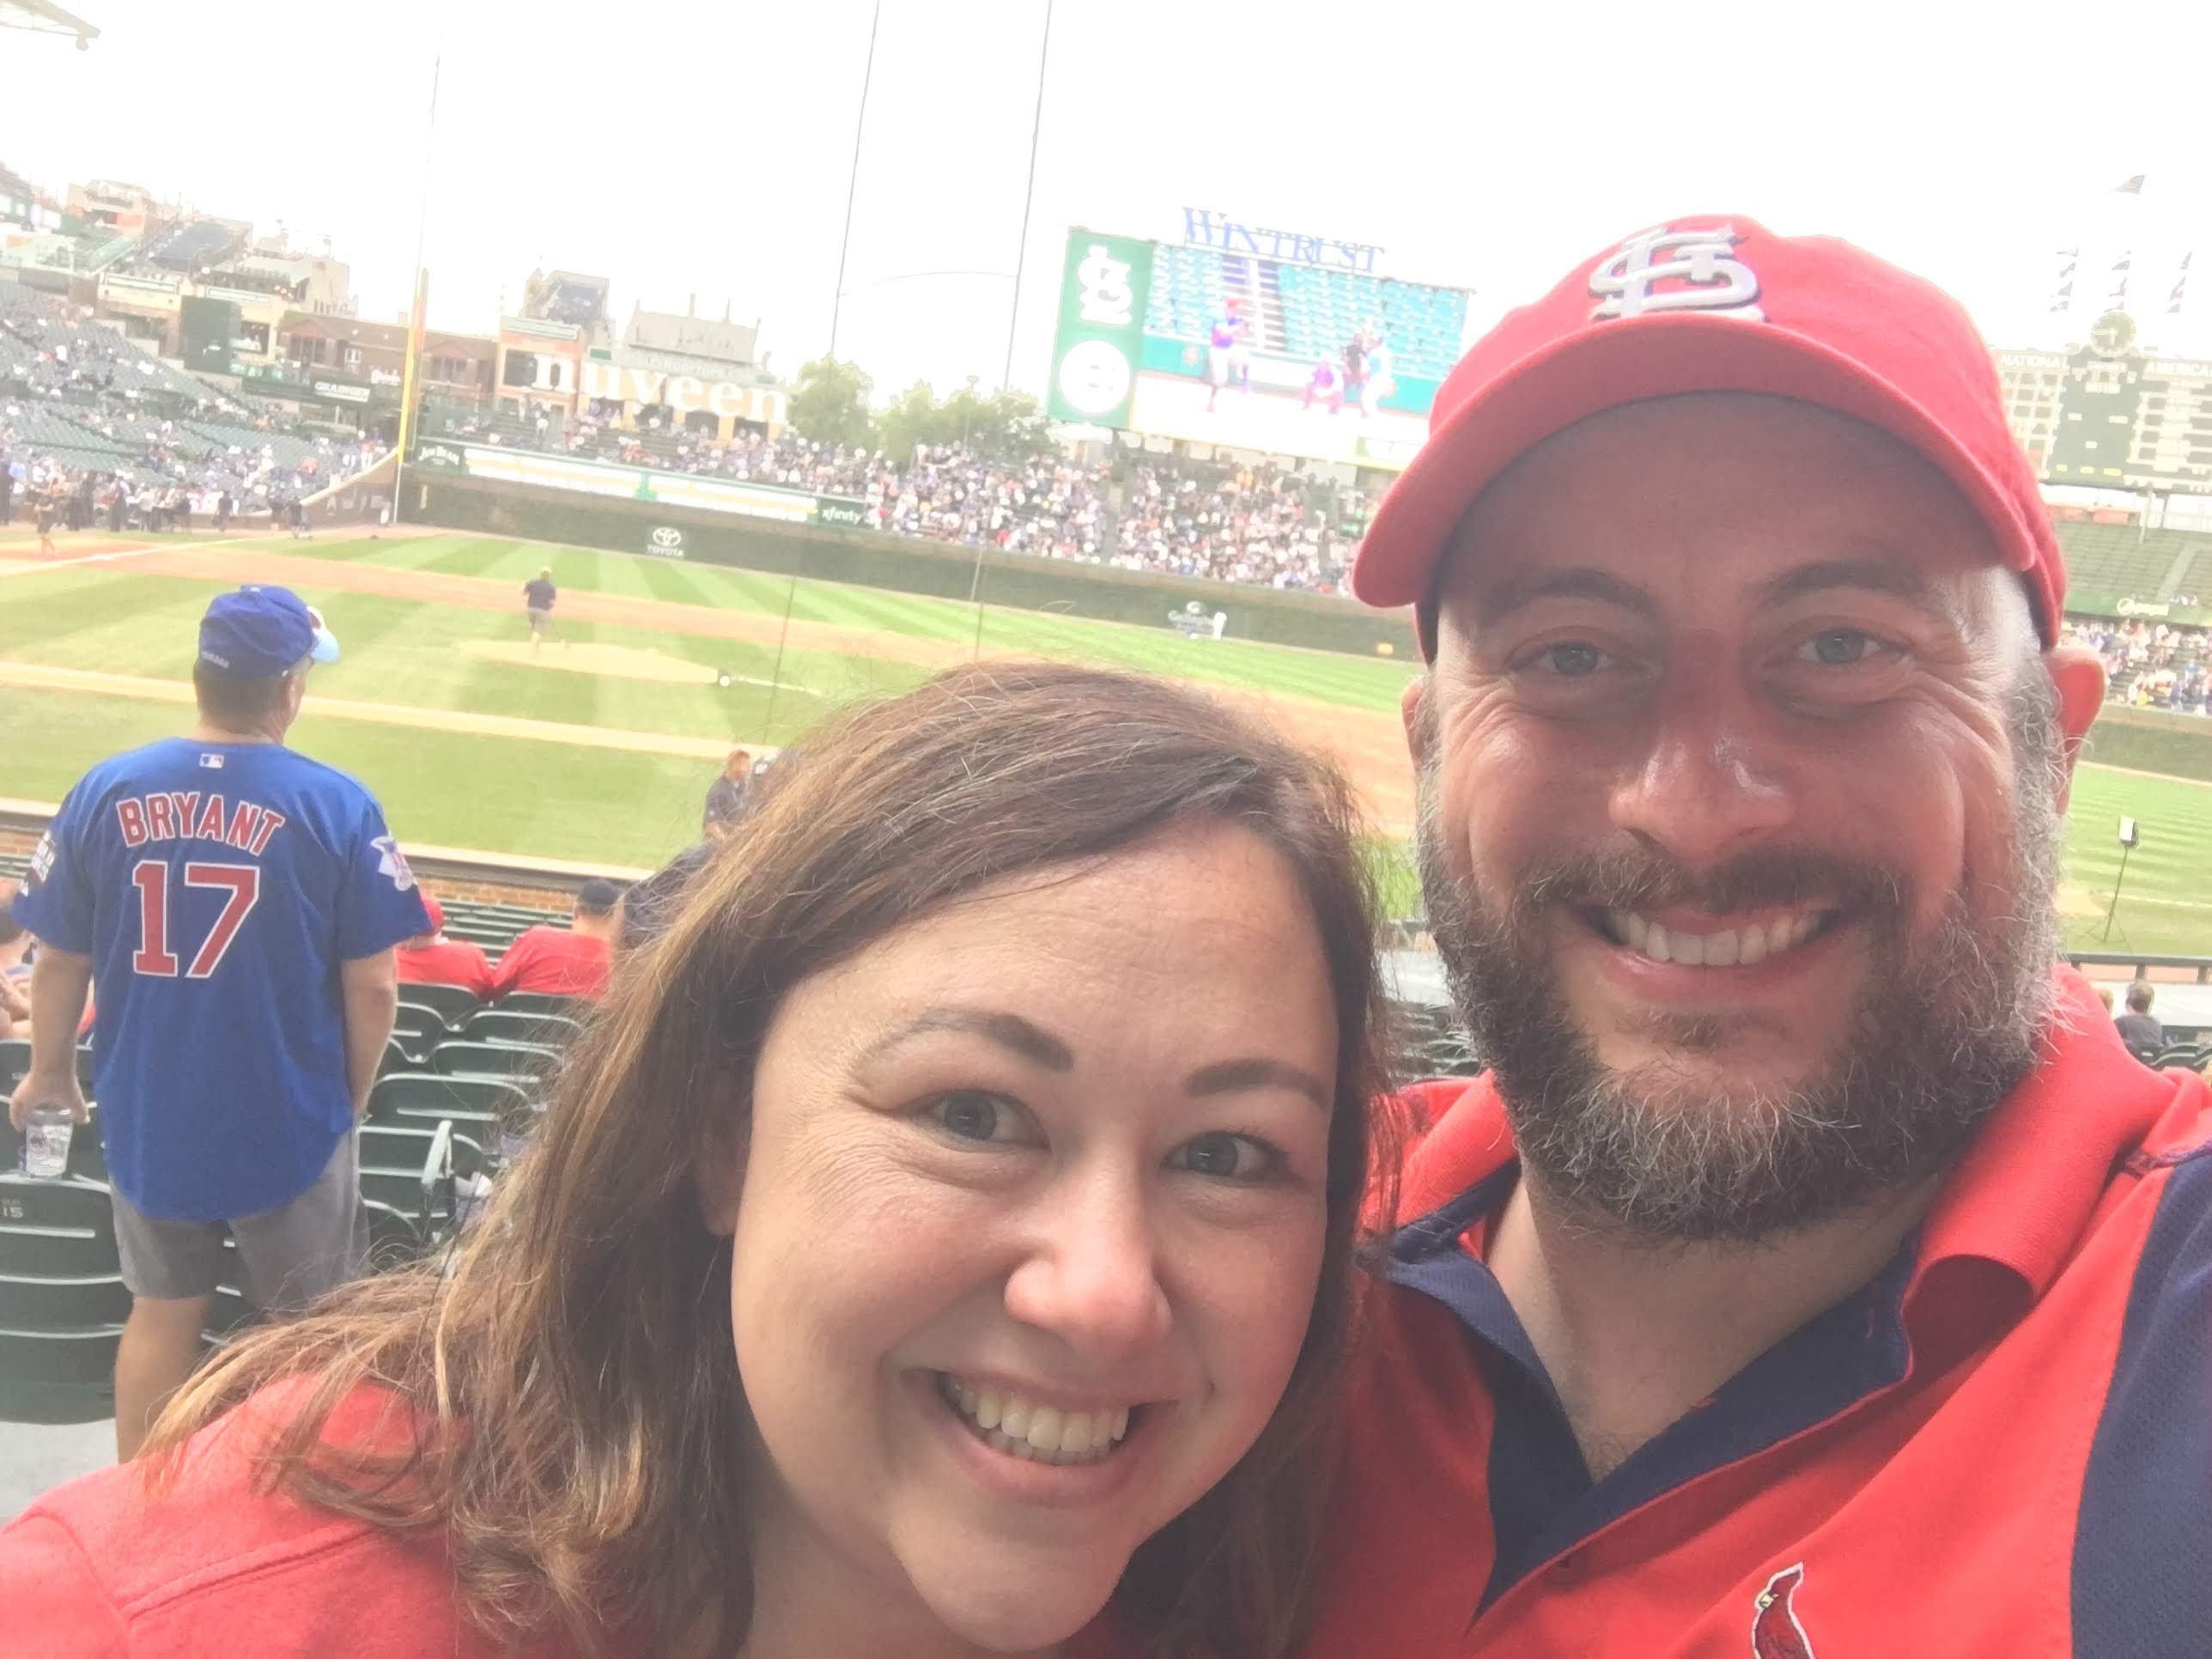 We love baseball! Go Cardinals!